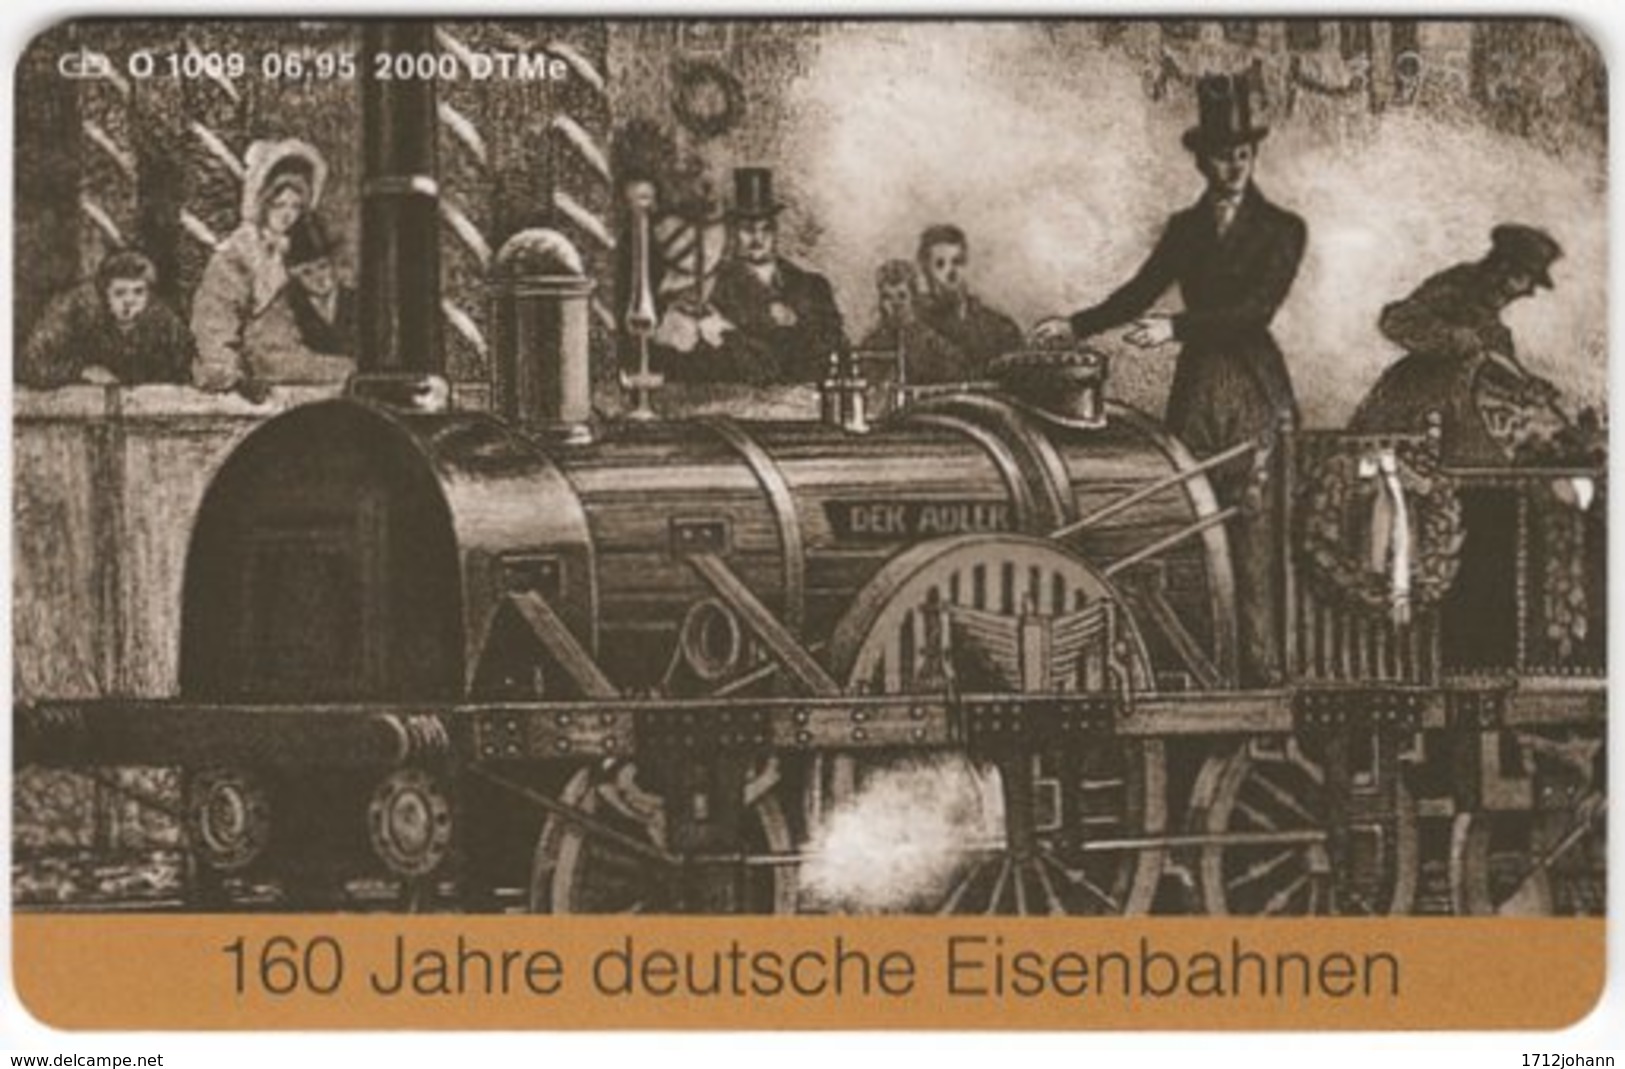 GERMANY O-Serie B-394 - 1009 06.95 - Painting, Traffic, Historic Steamlocomotive - MINT - O-Series: Kundenserie Vom Sammlerservice Ausgeschlossen